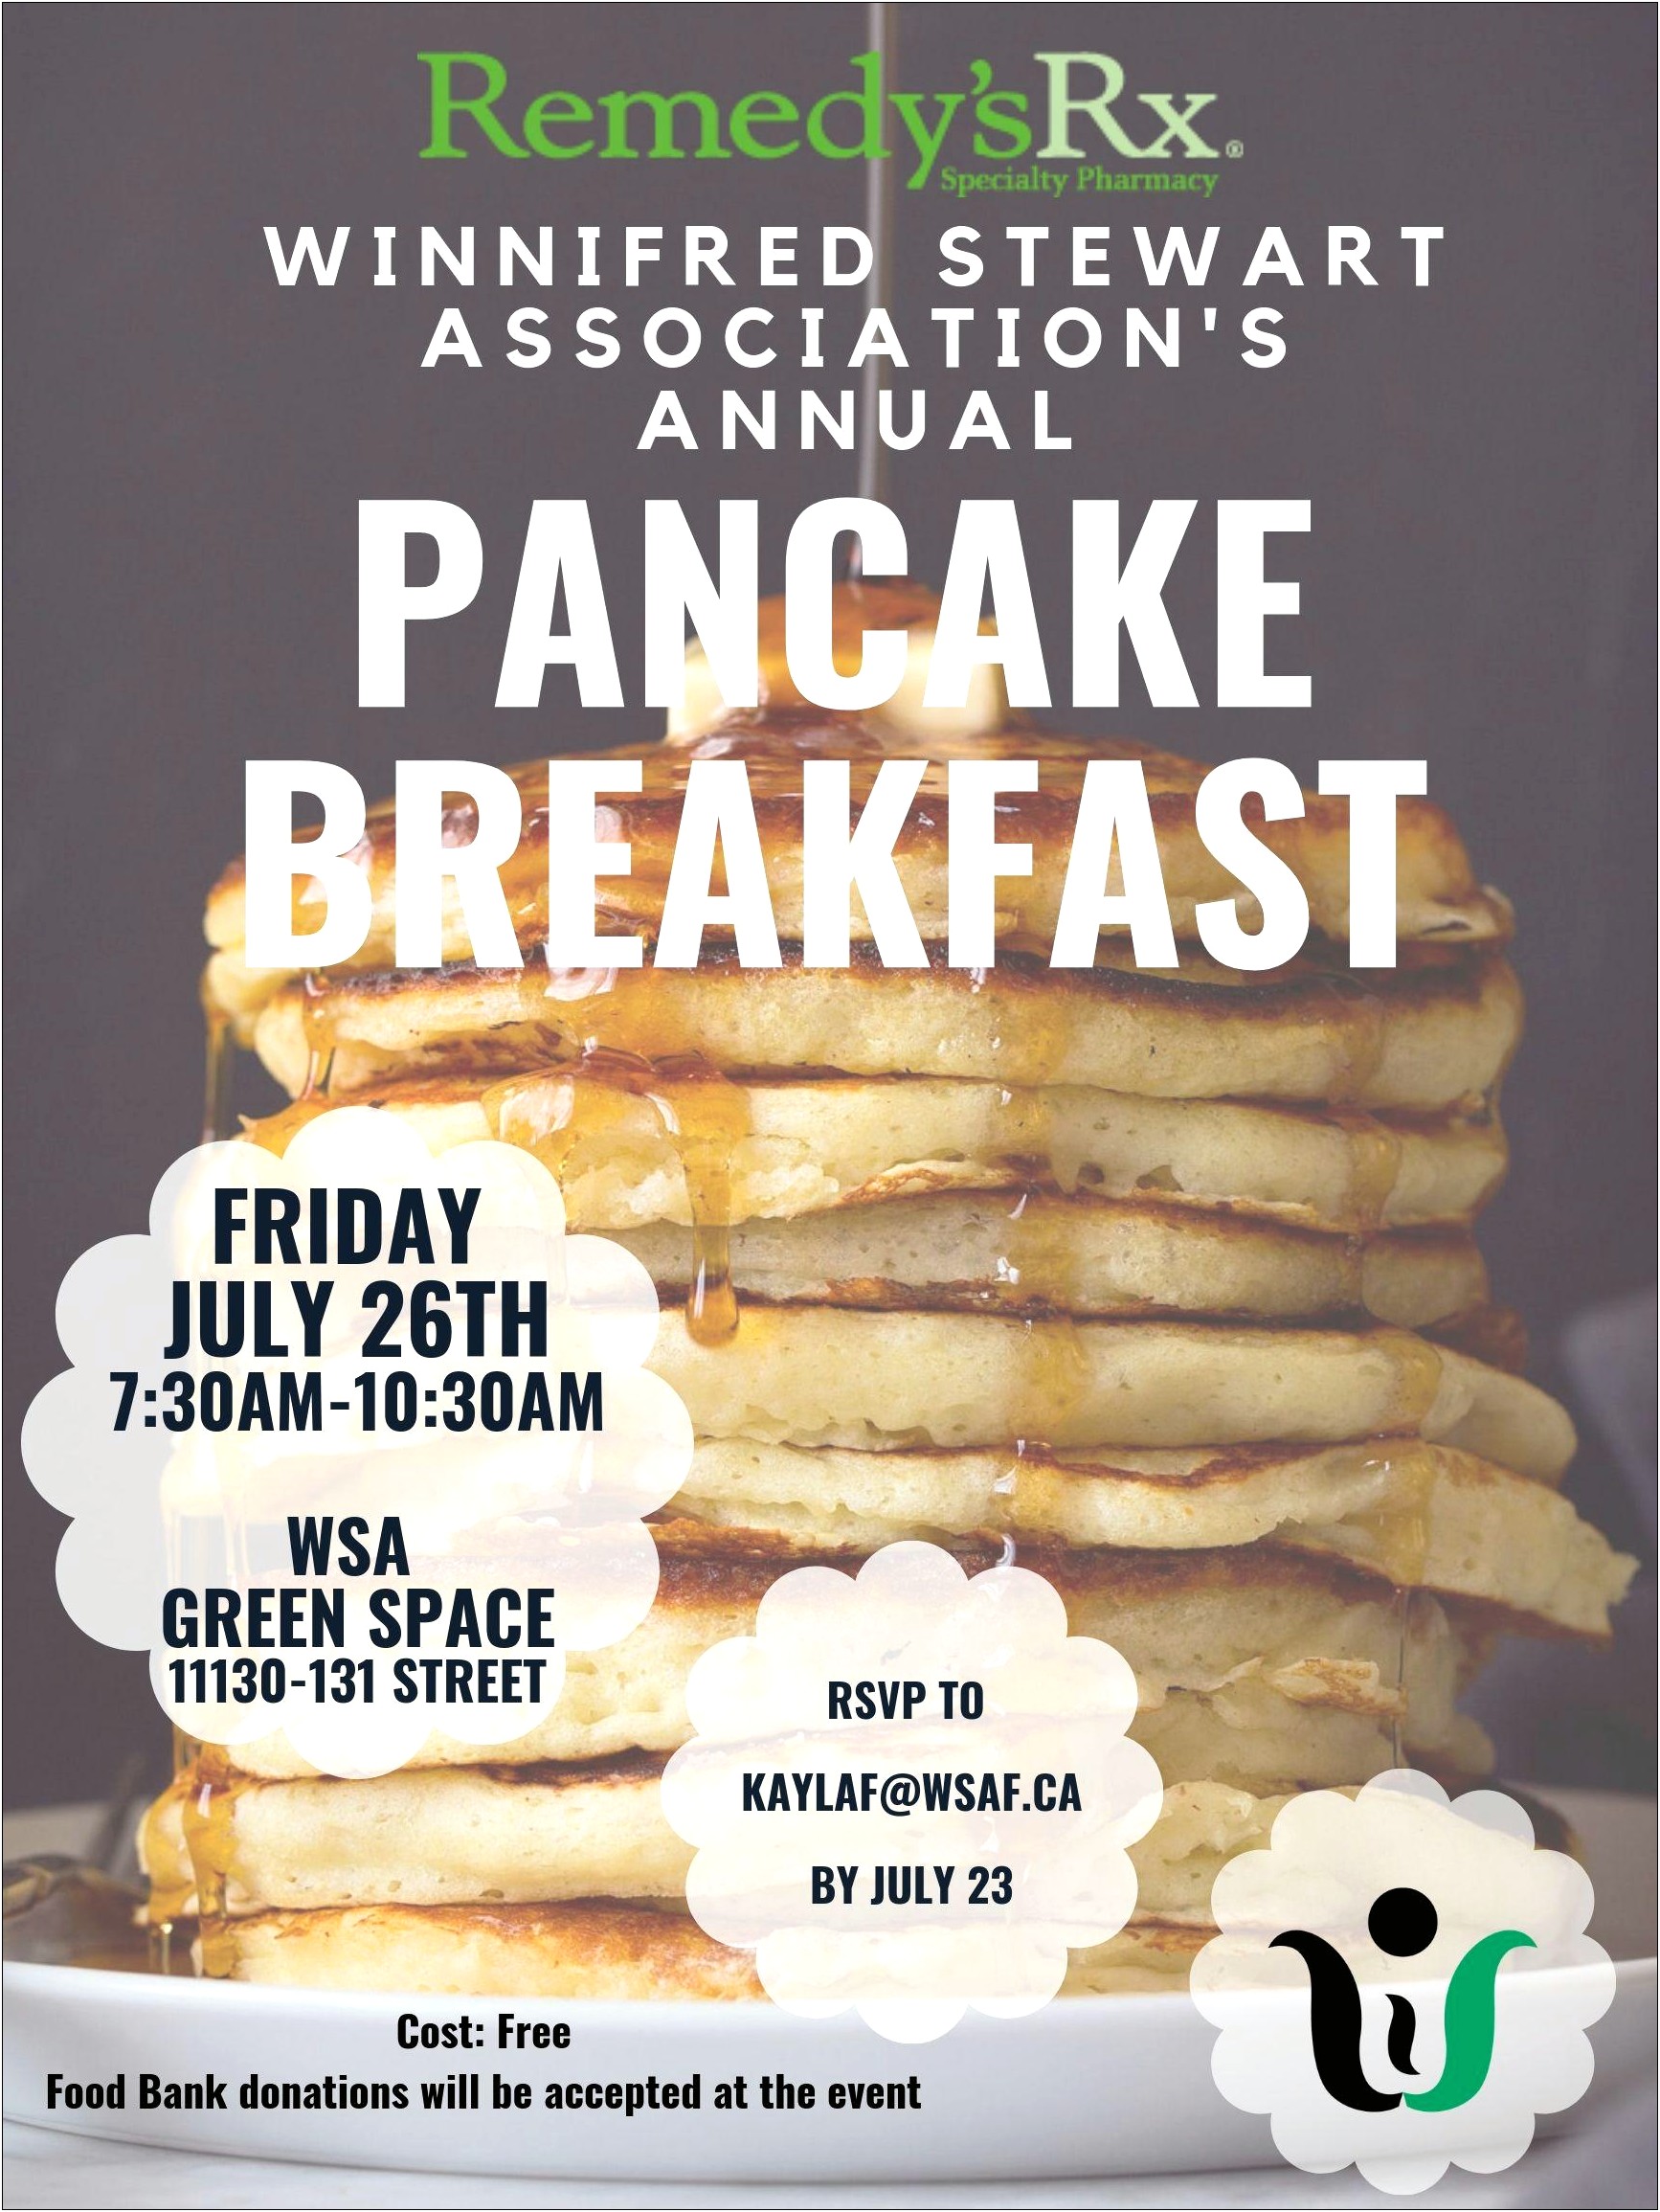 Pancake Breakfast Fundraiser Flyer Template Free